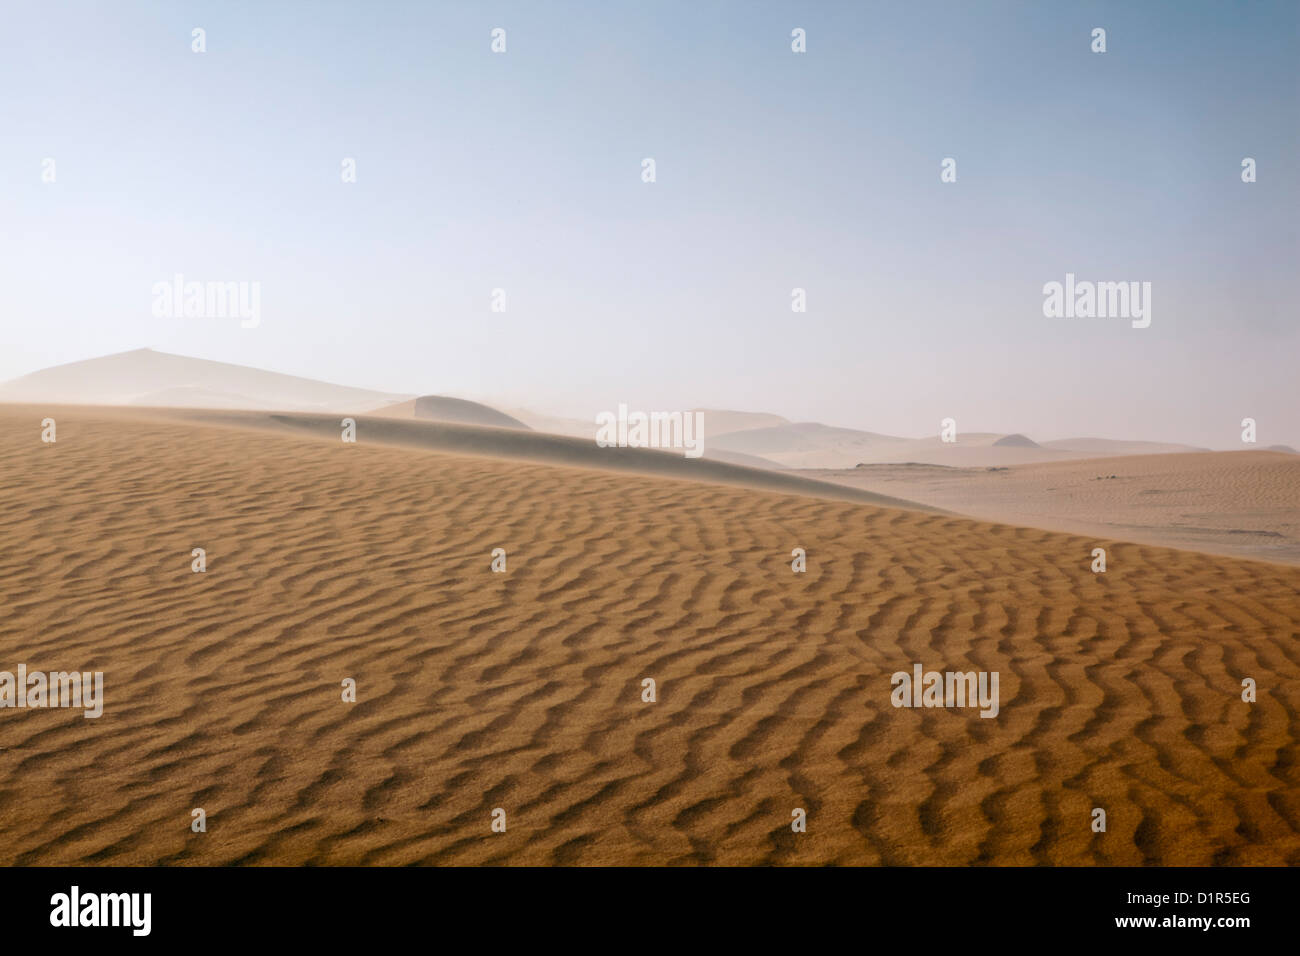 Le Maroc, M'Hamid, Erg Chigaga dunes de sable. Désert du Sahara. Tempête de sable. Banque D'Images